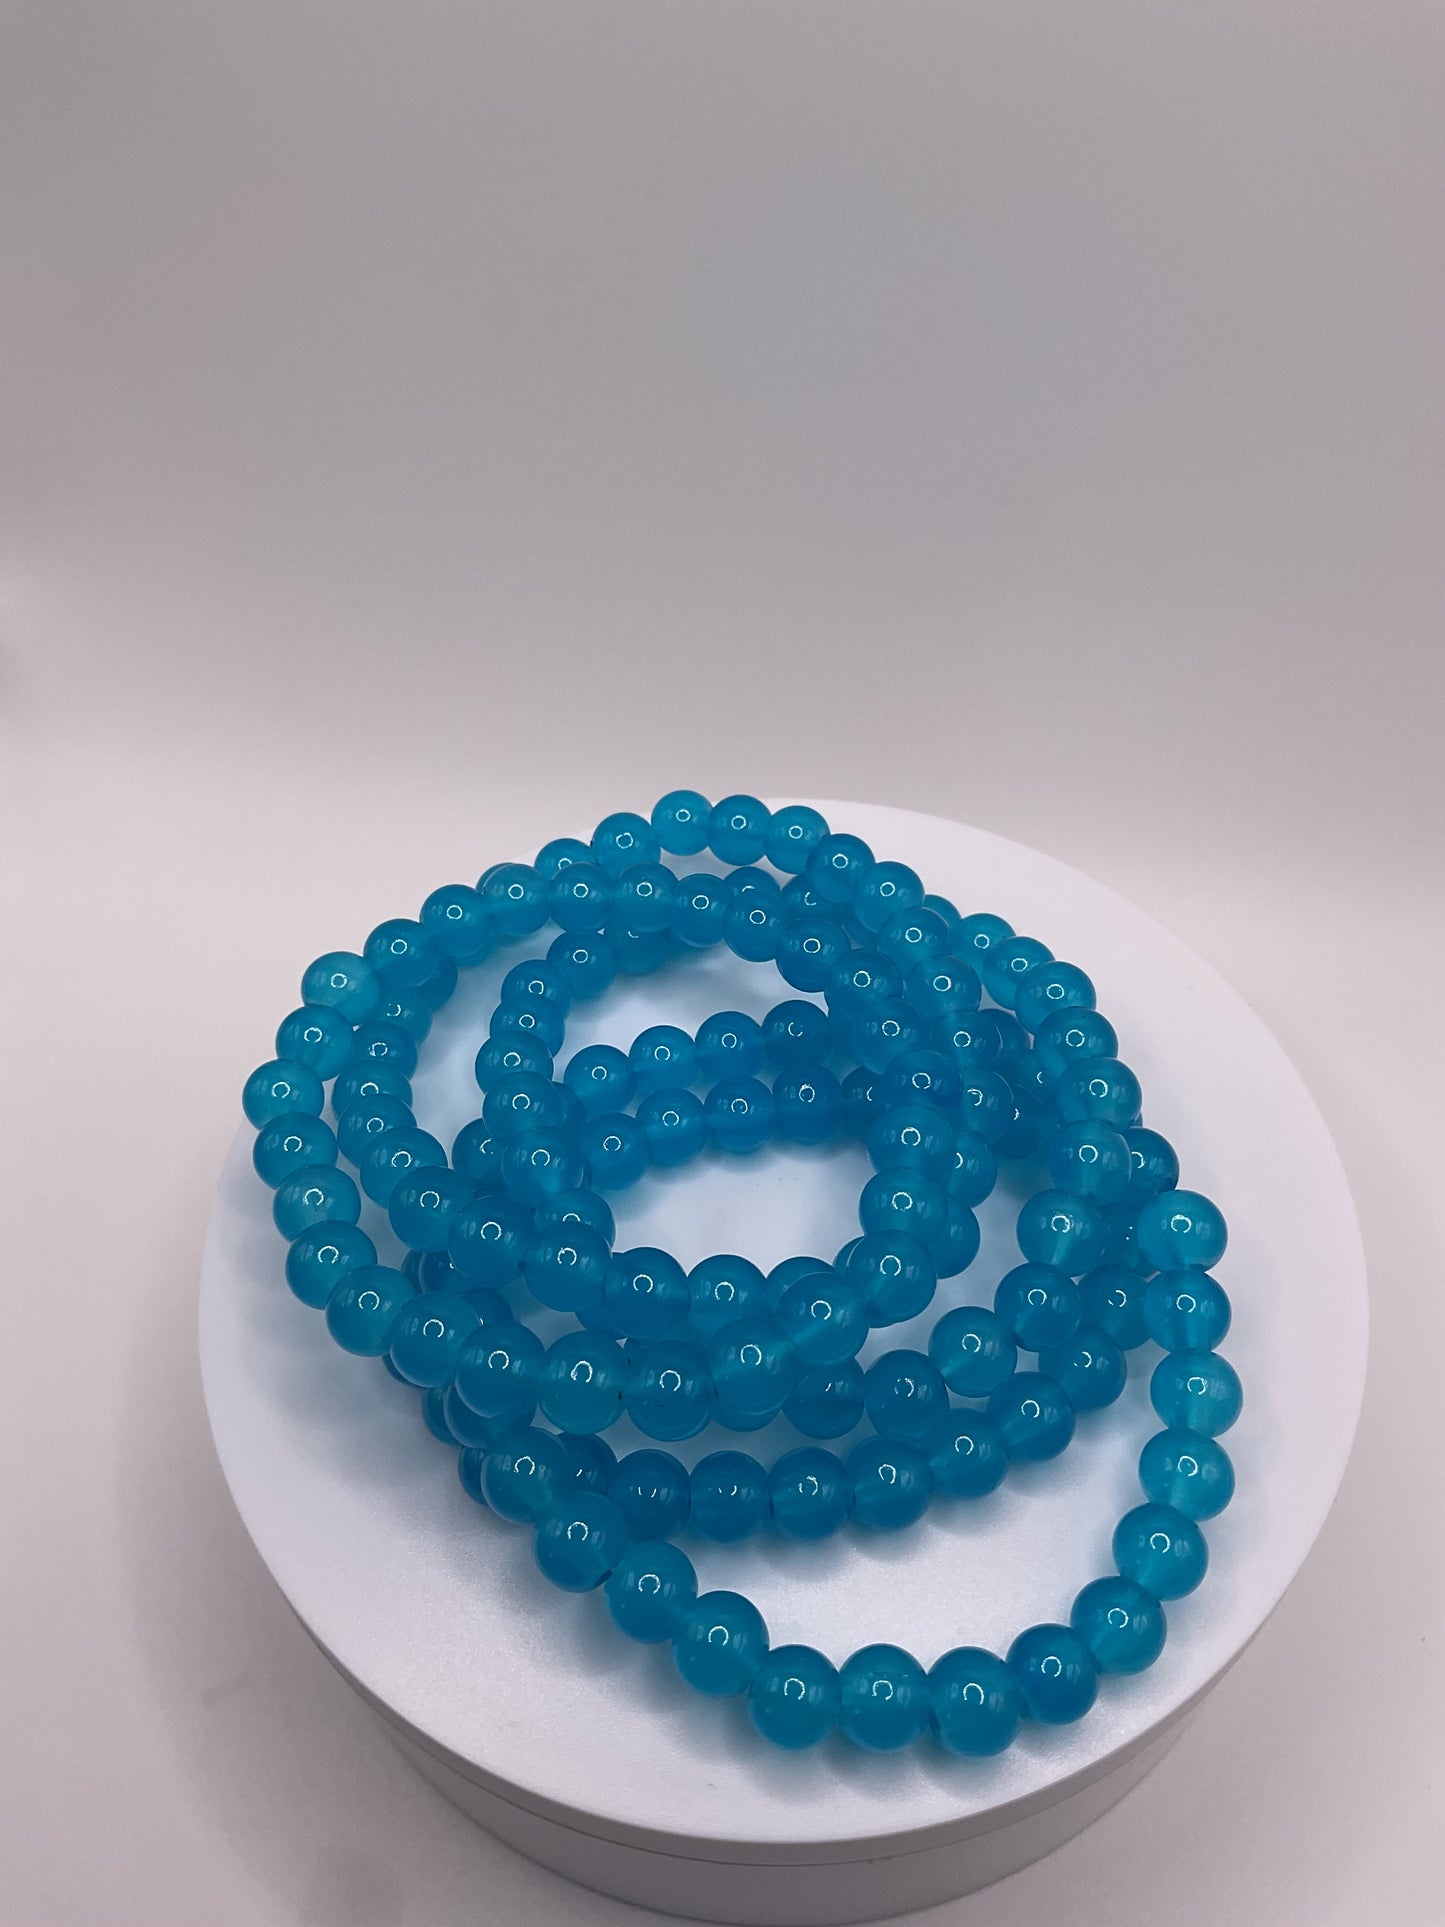 Blue Marie bracelet